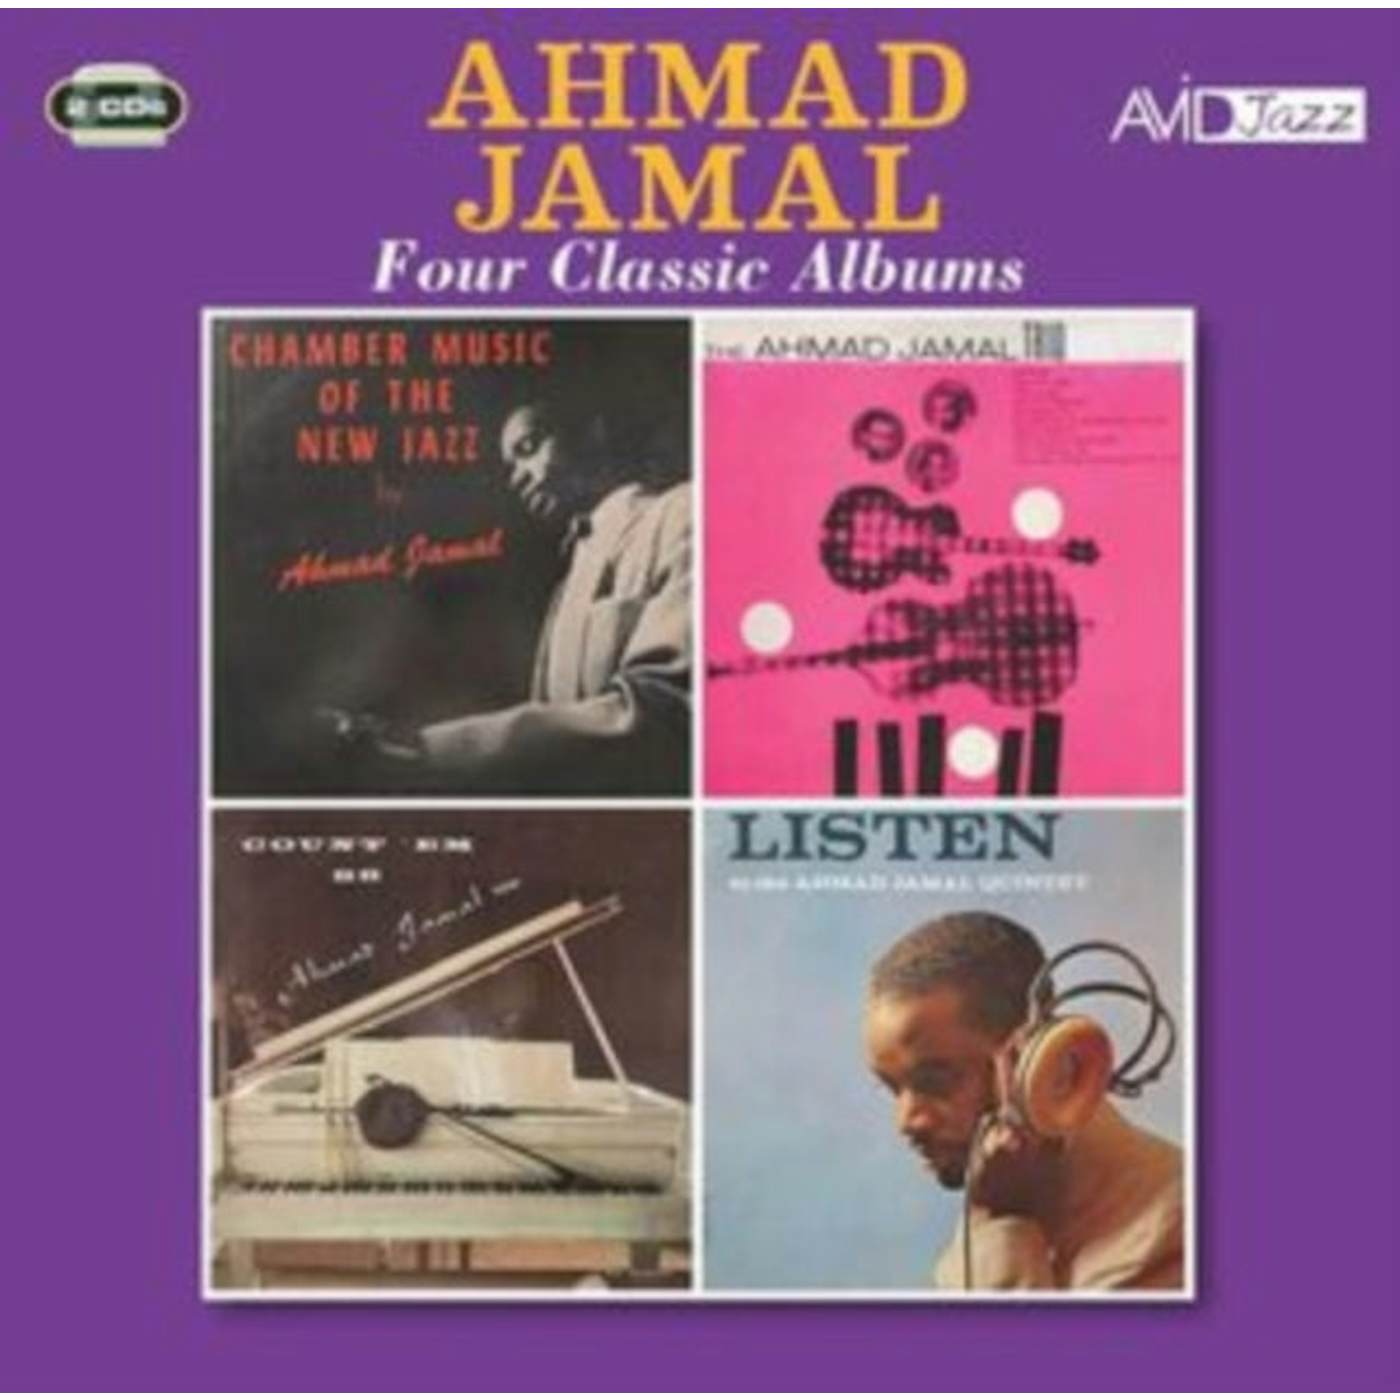 Ahmad Jamal CD - Four Classic Albums (Chamber Music Of The New Jazz / Ahmad Jamal Trio / Count 'Em 88 / Listen To The Ahmad Jamal Quintet)